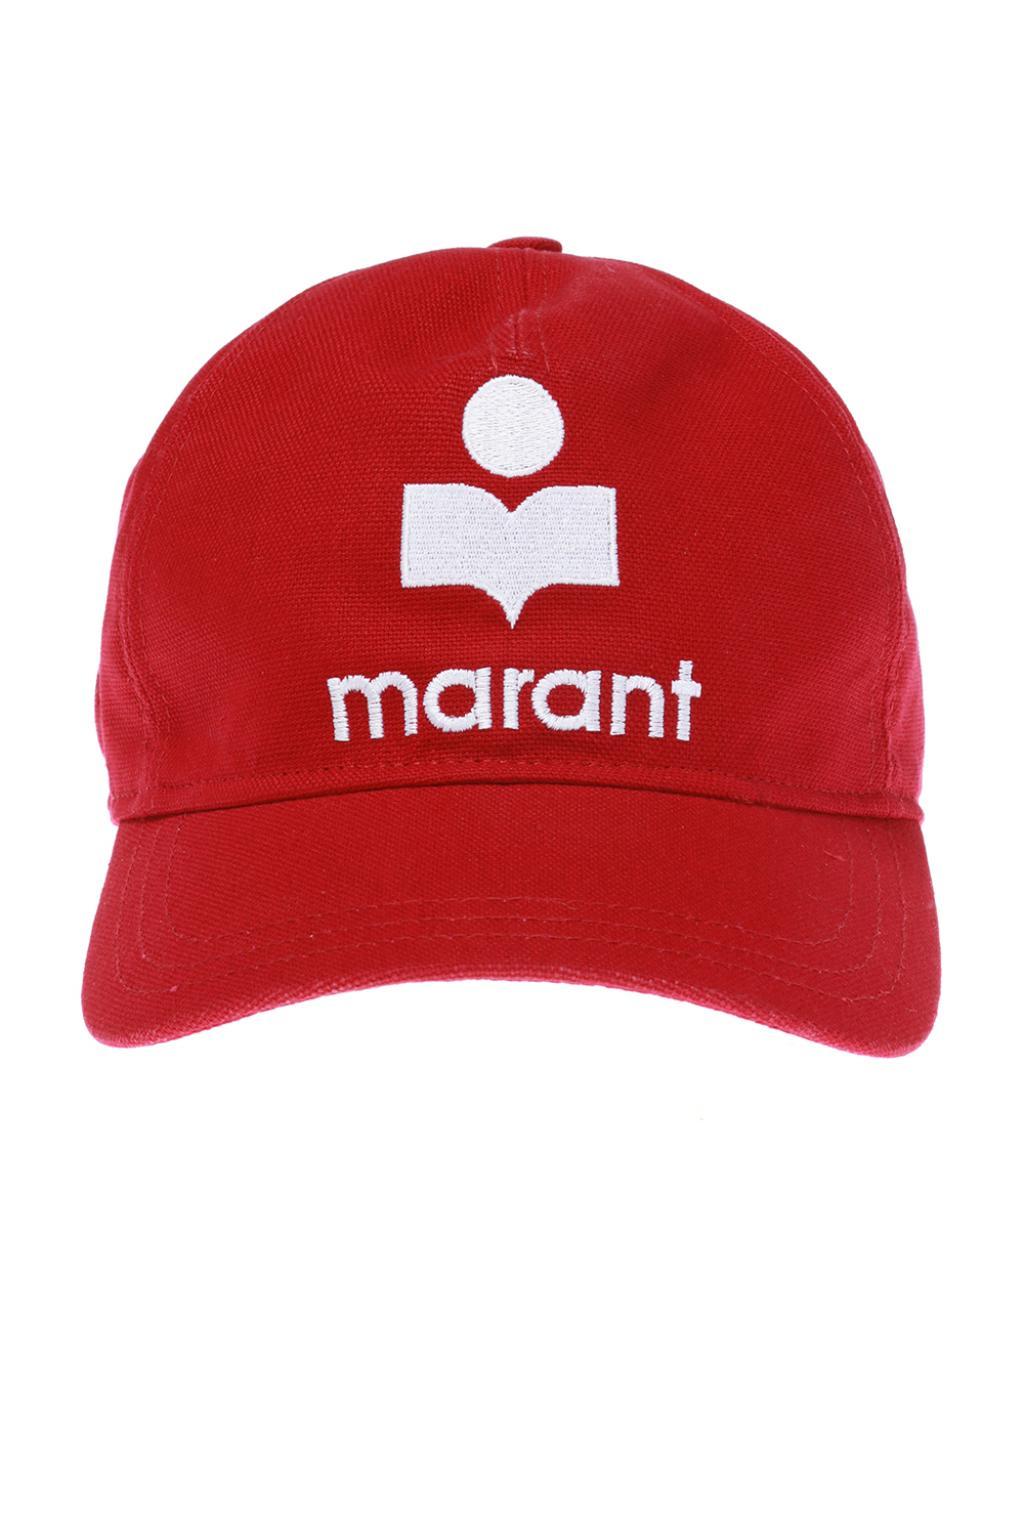 Isabel Marant Logo Baseball Cap in Red - Lyst